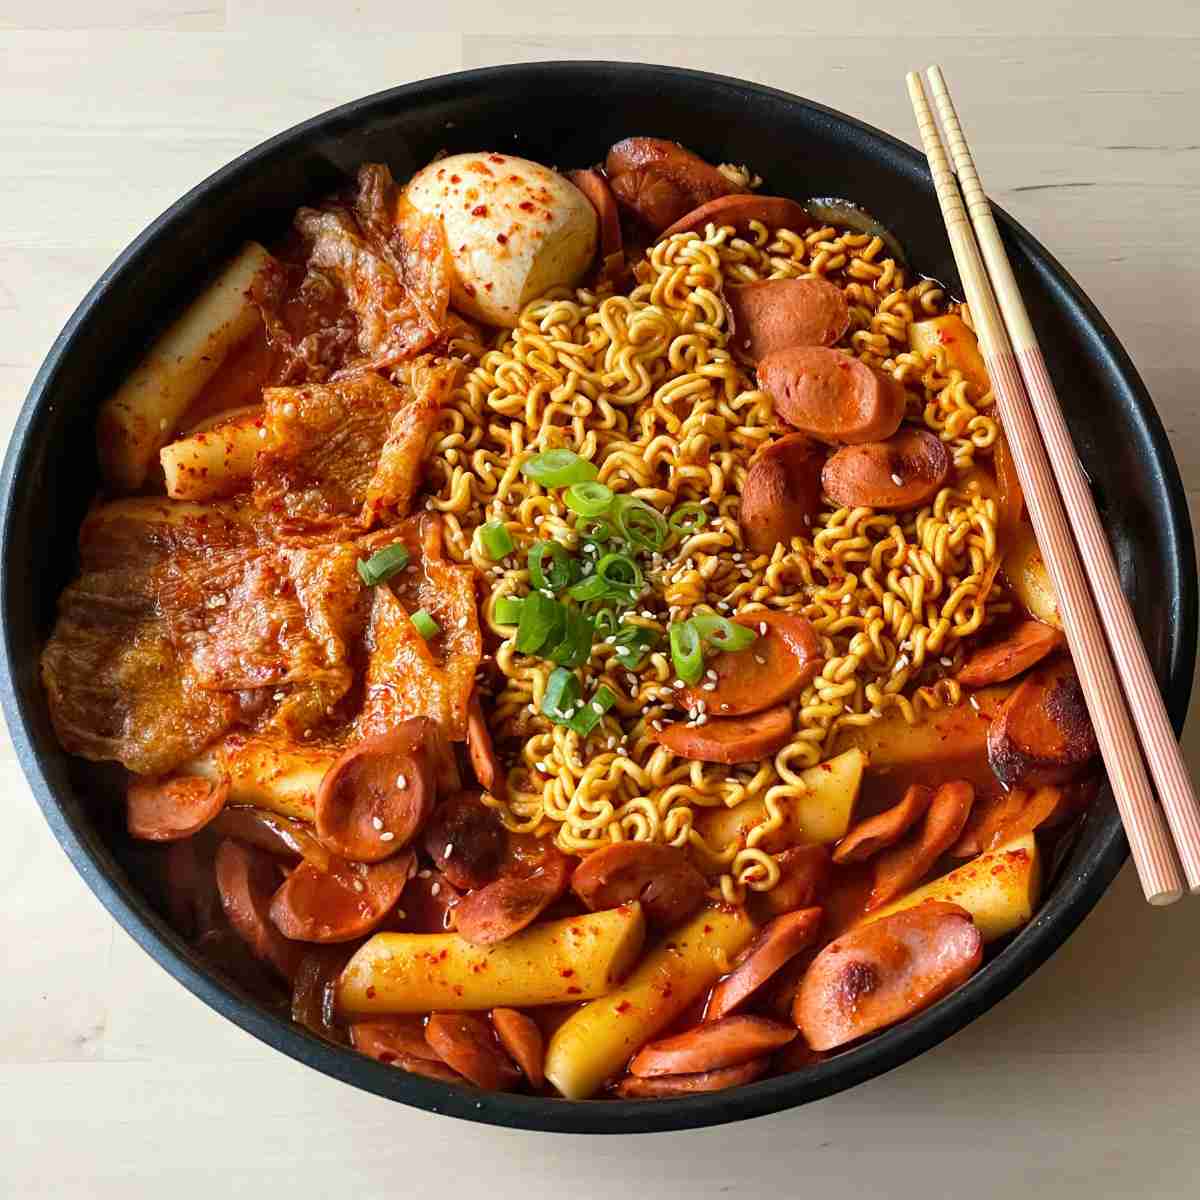 tteokbokki with added ramyeon noodles